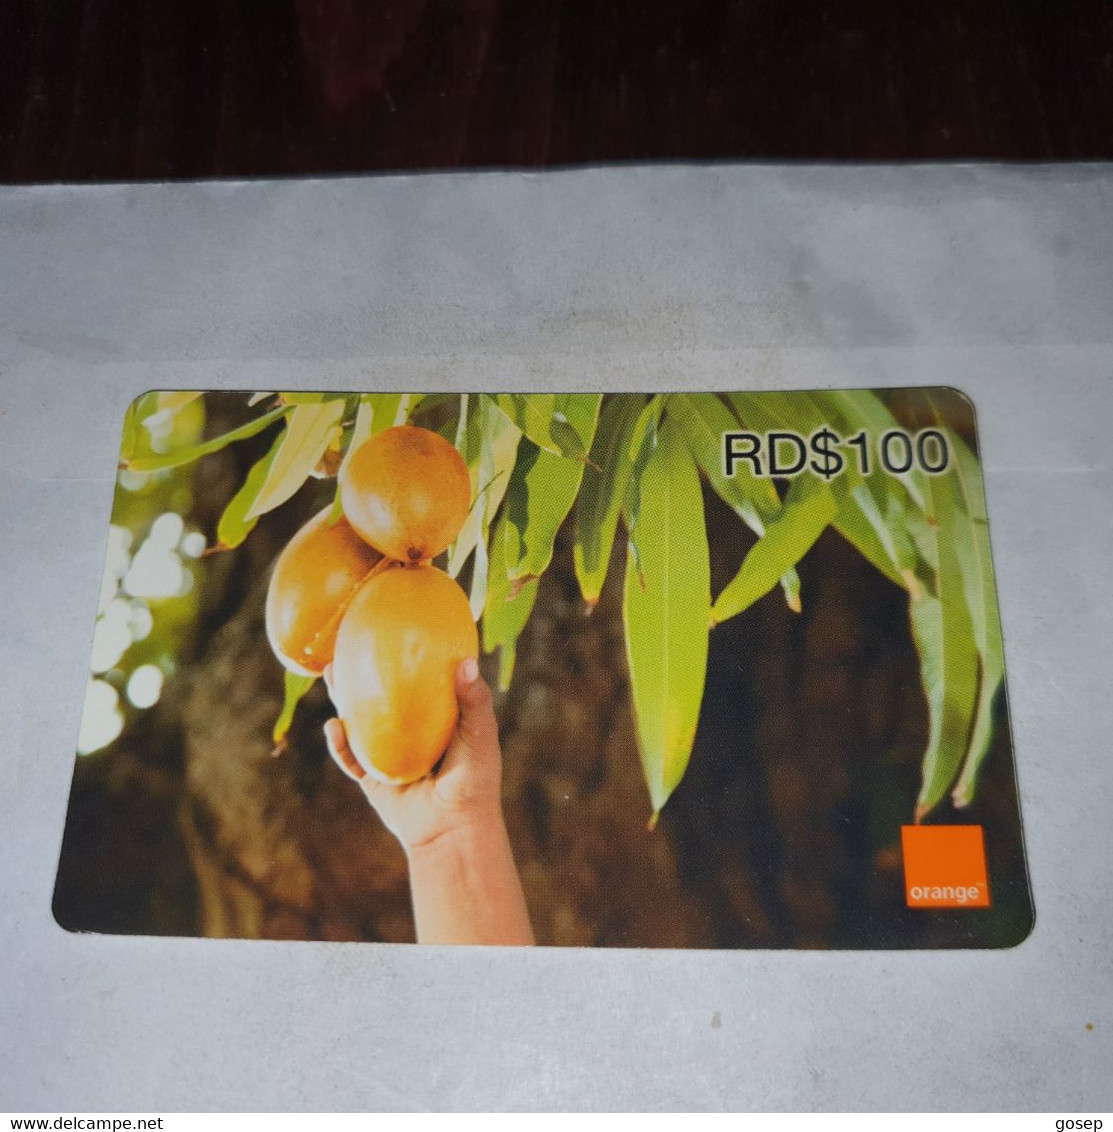 Dominicana-(orange-29rd$100)-(2490-0662-3748-33)-three Mango-(38)-(31.12.2010)-used Card+1card Prepiad Free - Dominicana